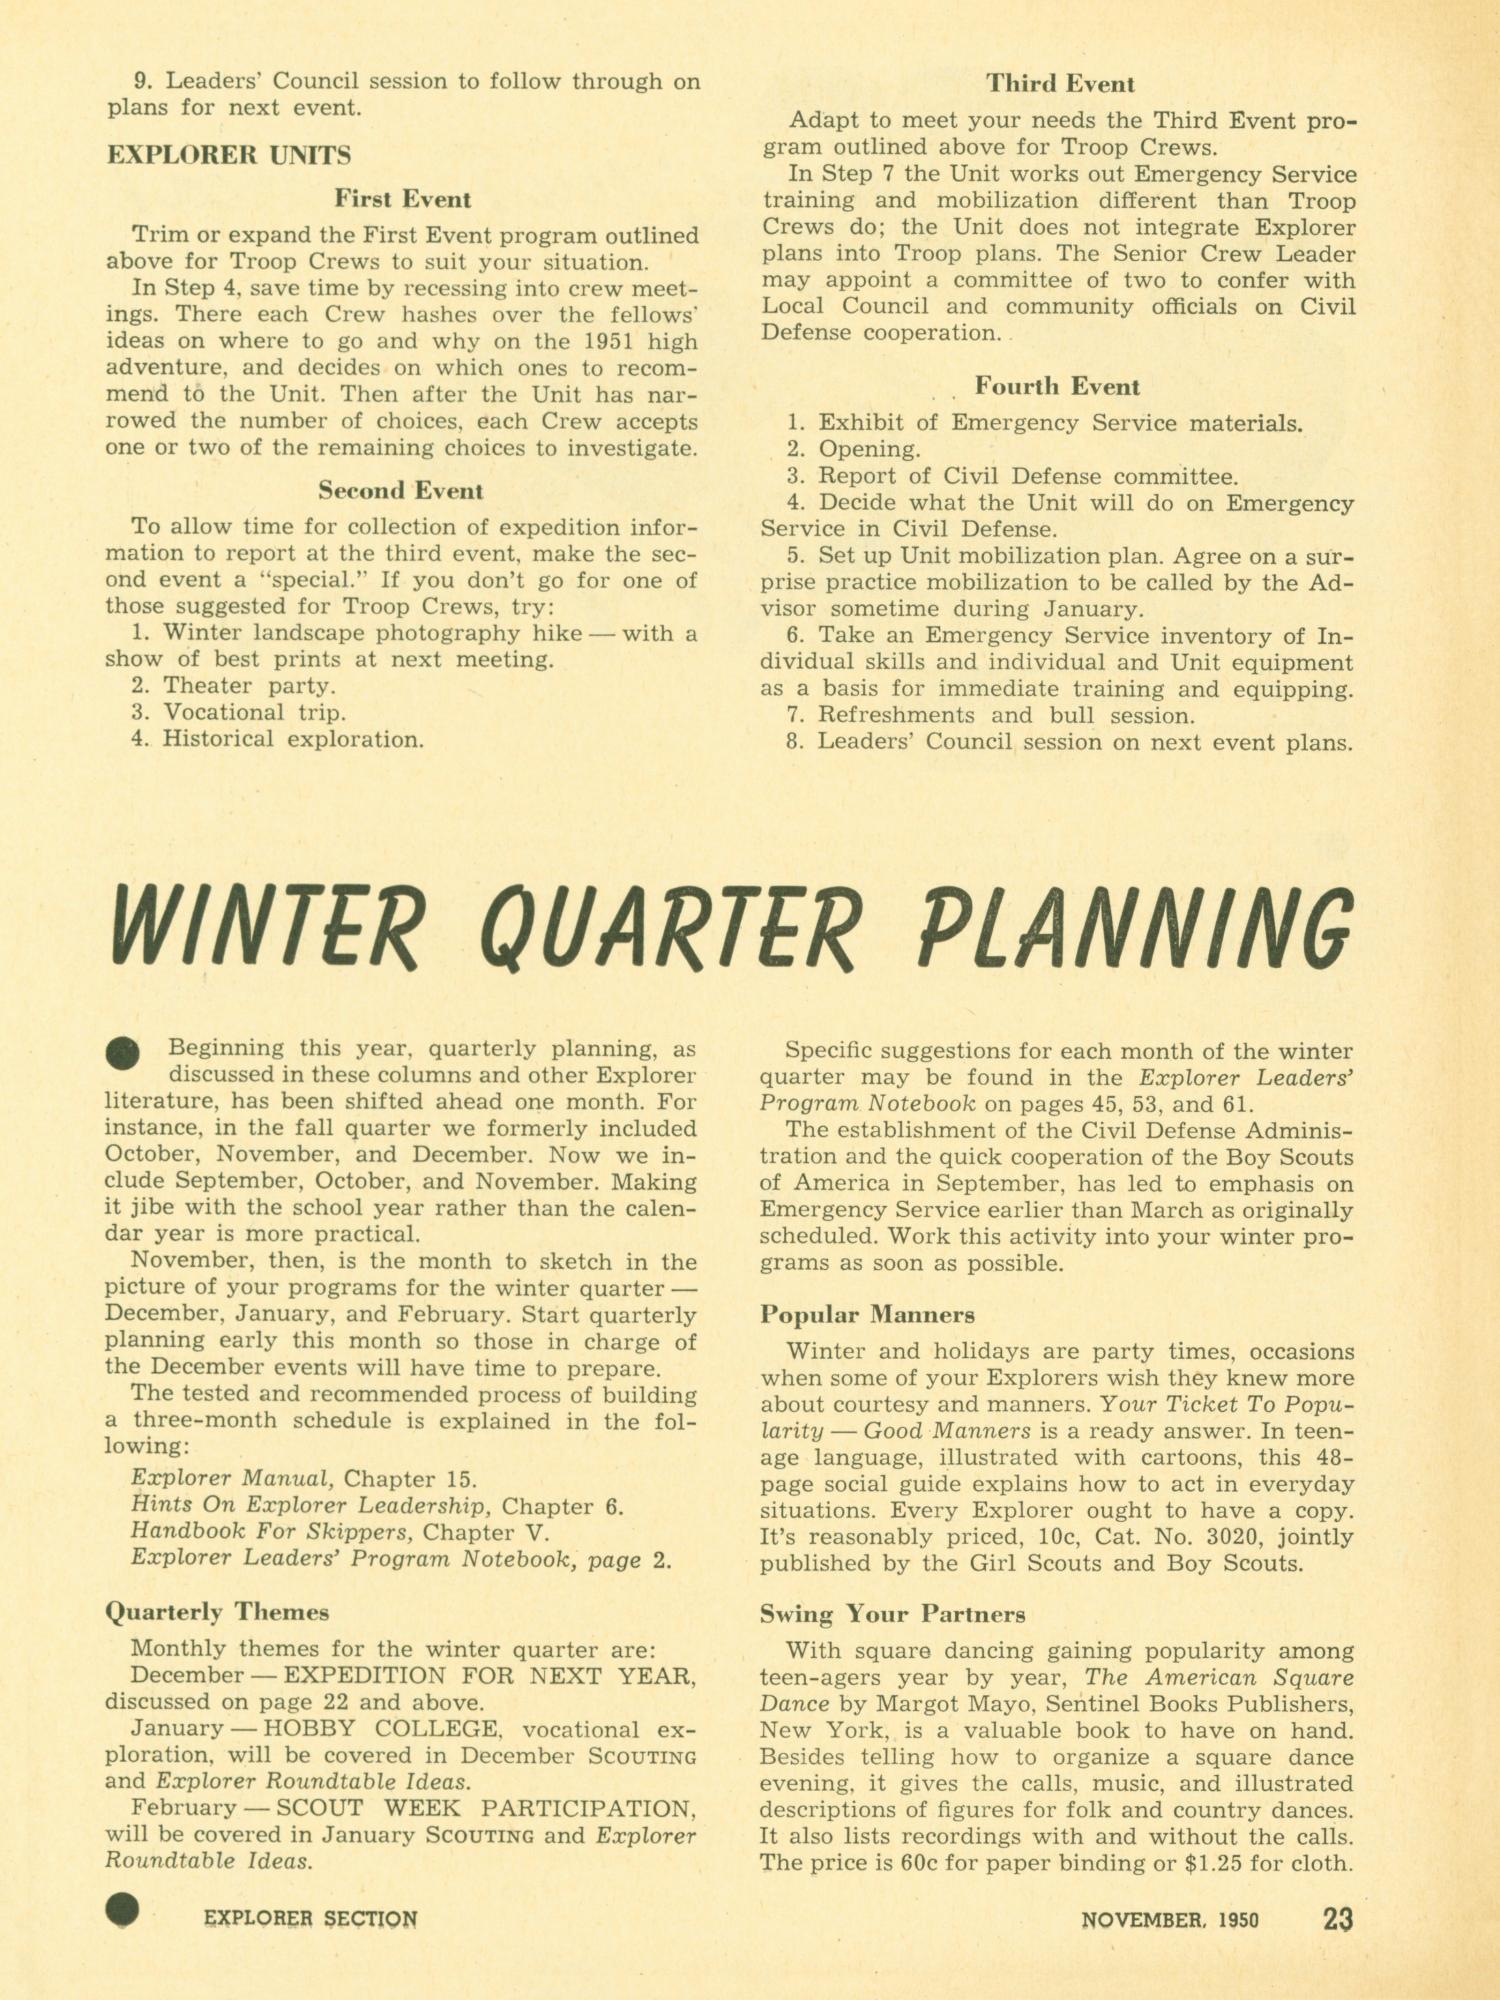 Scouting, Volume 38, Number 9, November 1950
                                                
                                                    23
                                                